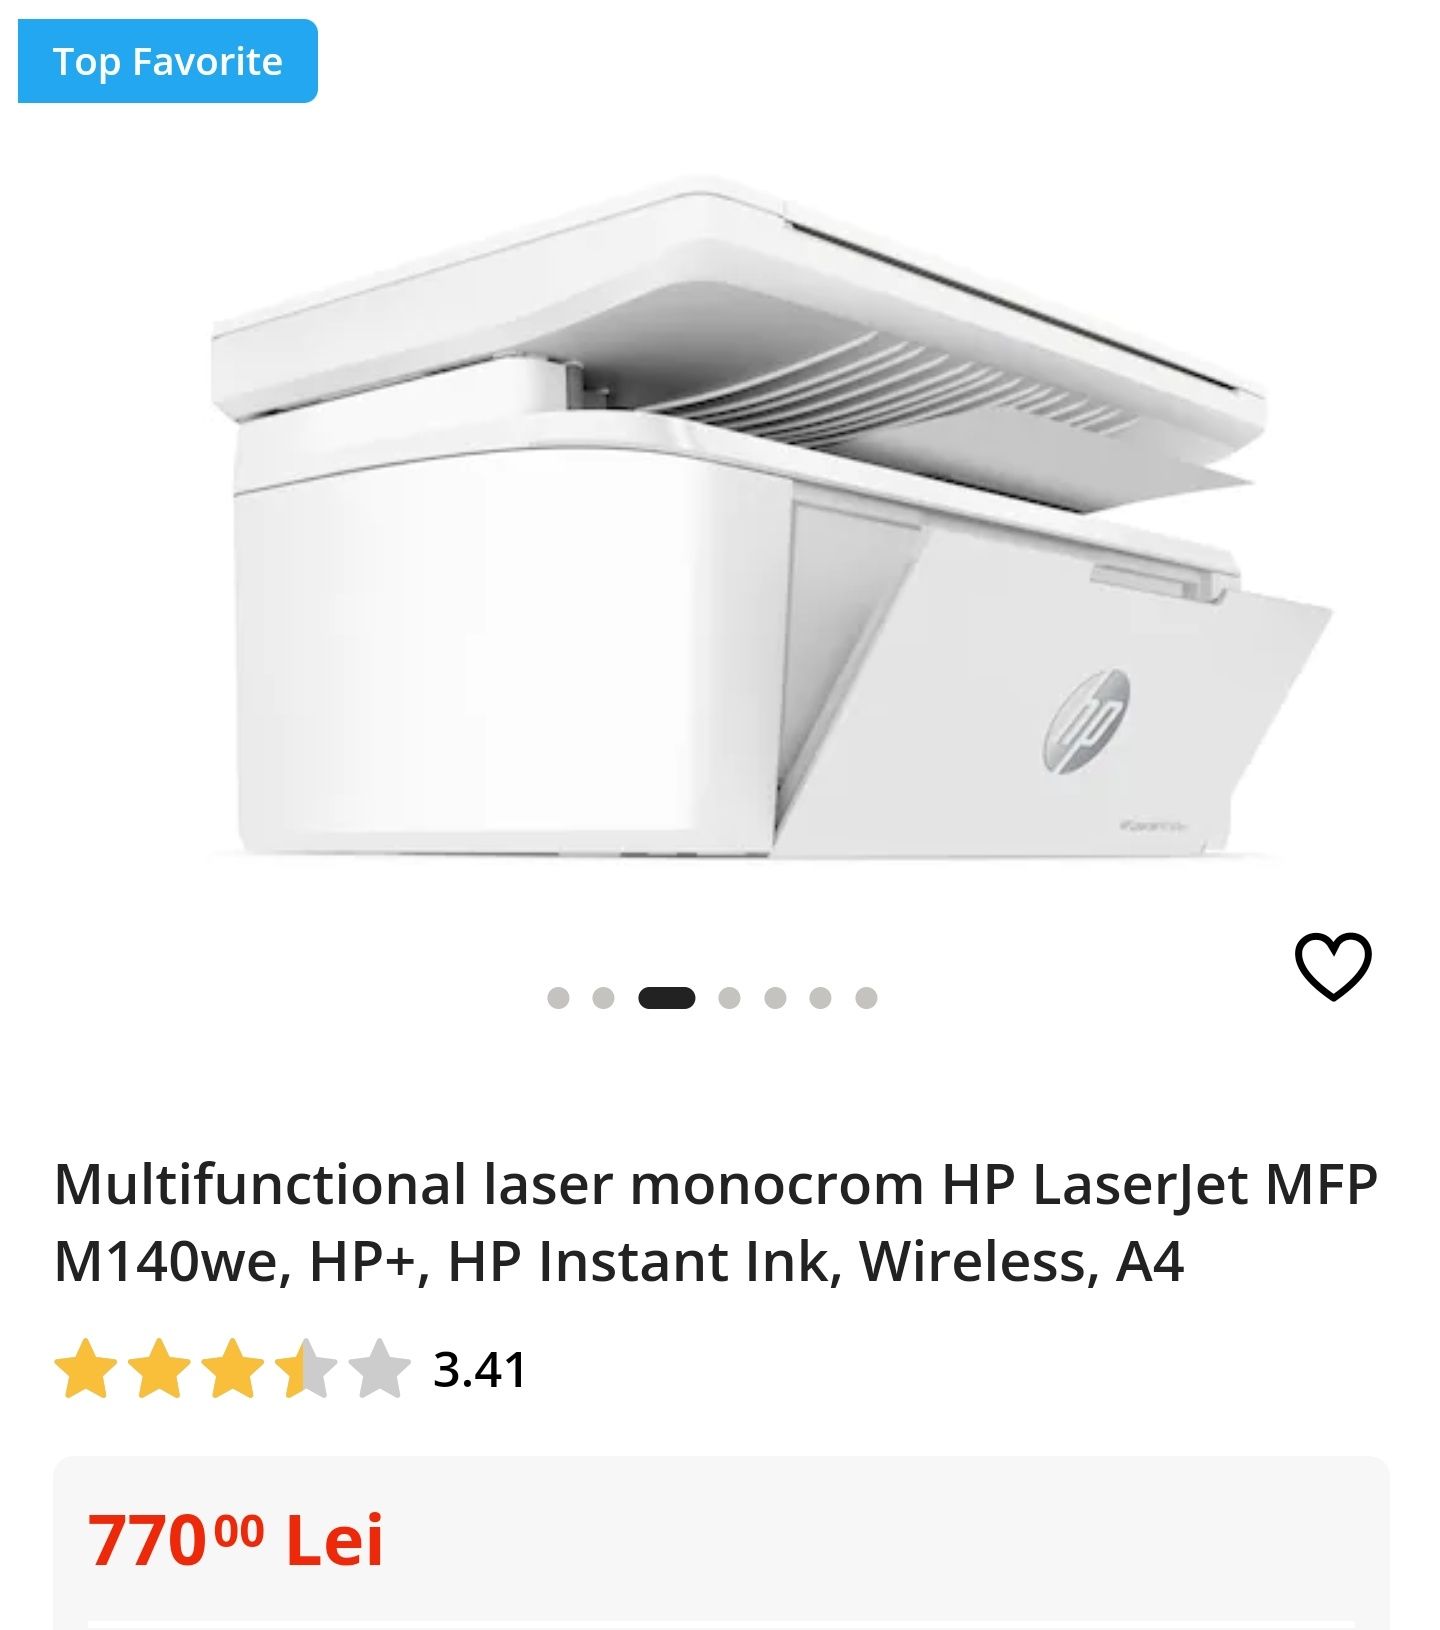 Multifunctional laser monocrom HP LaserJet MFP M140we